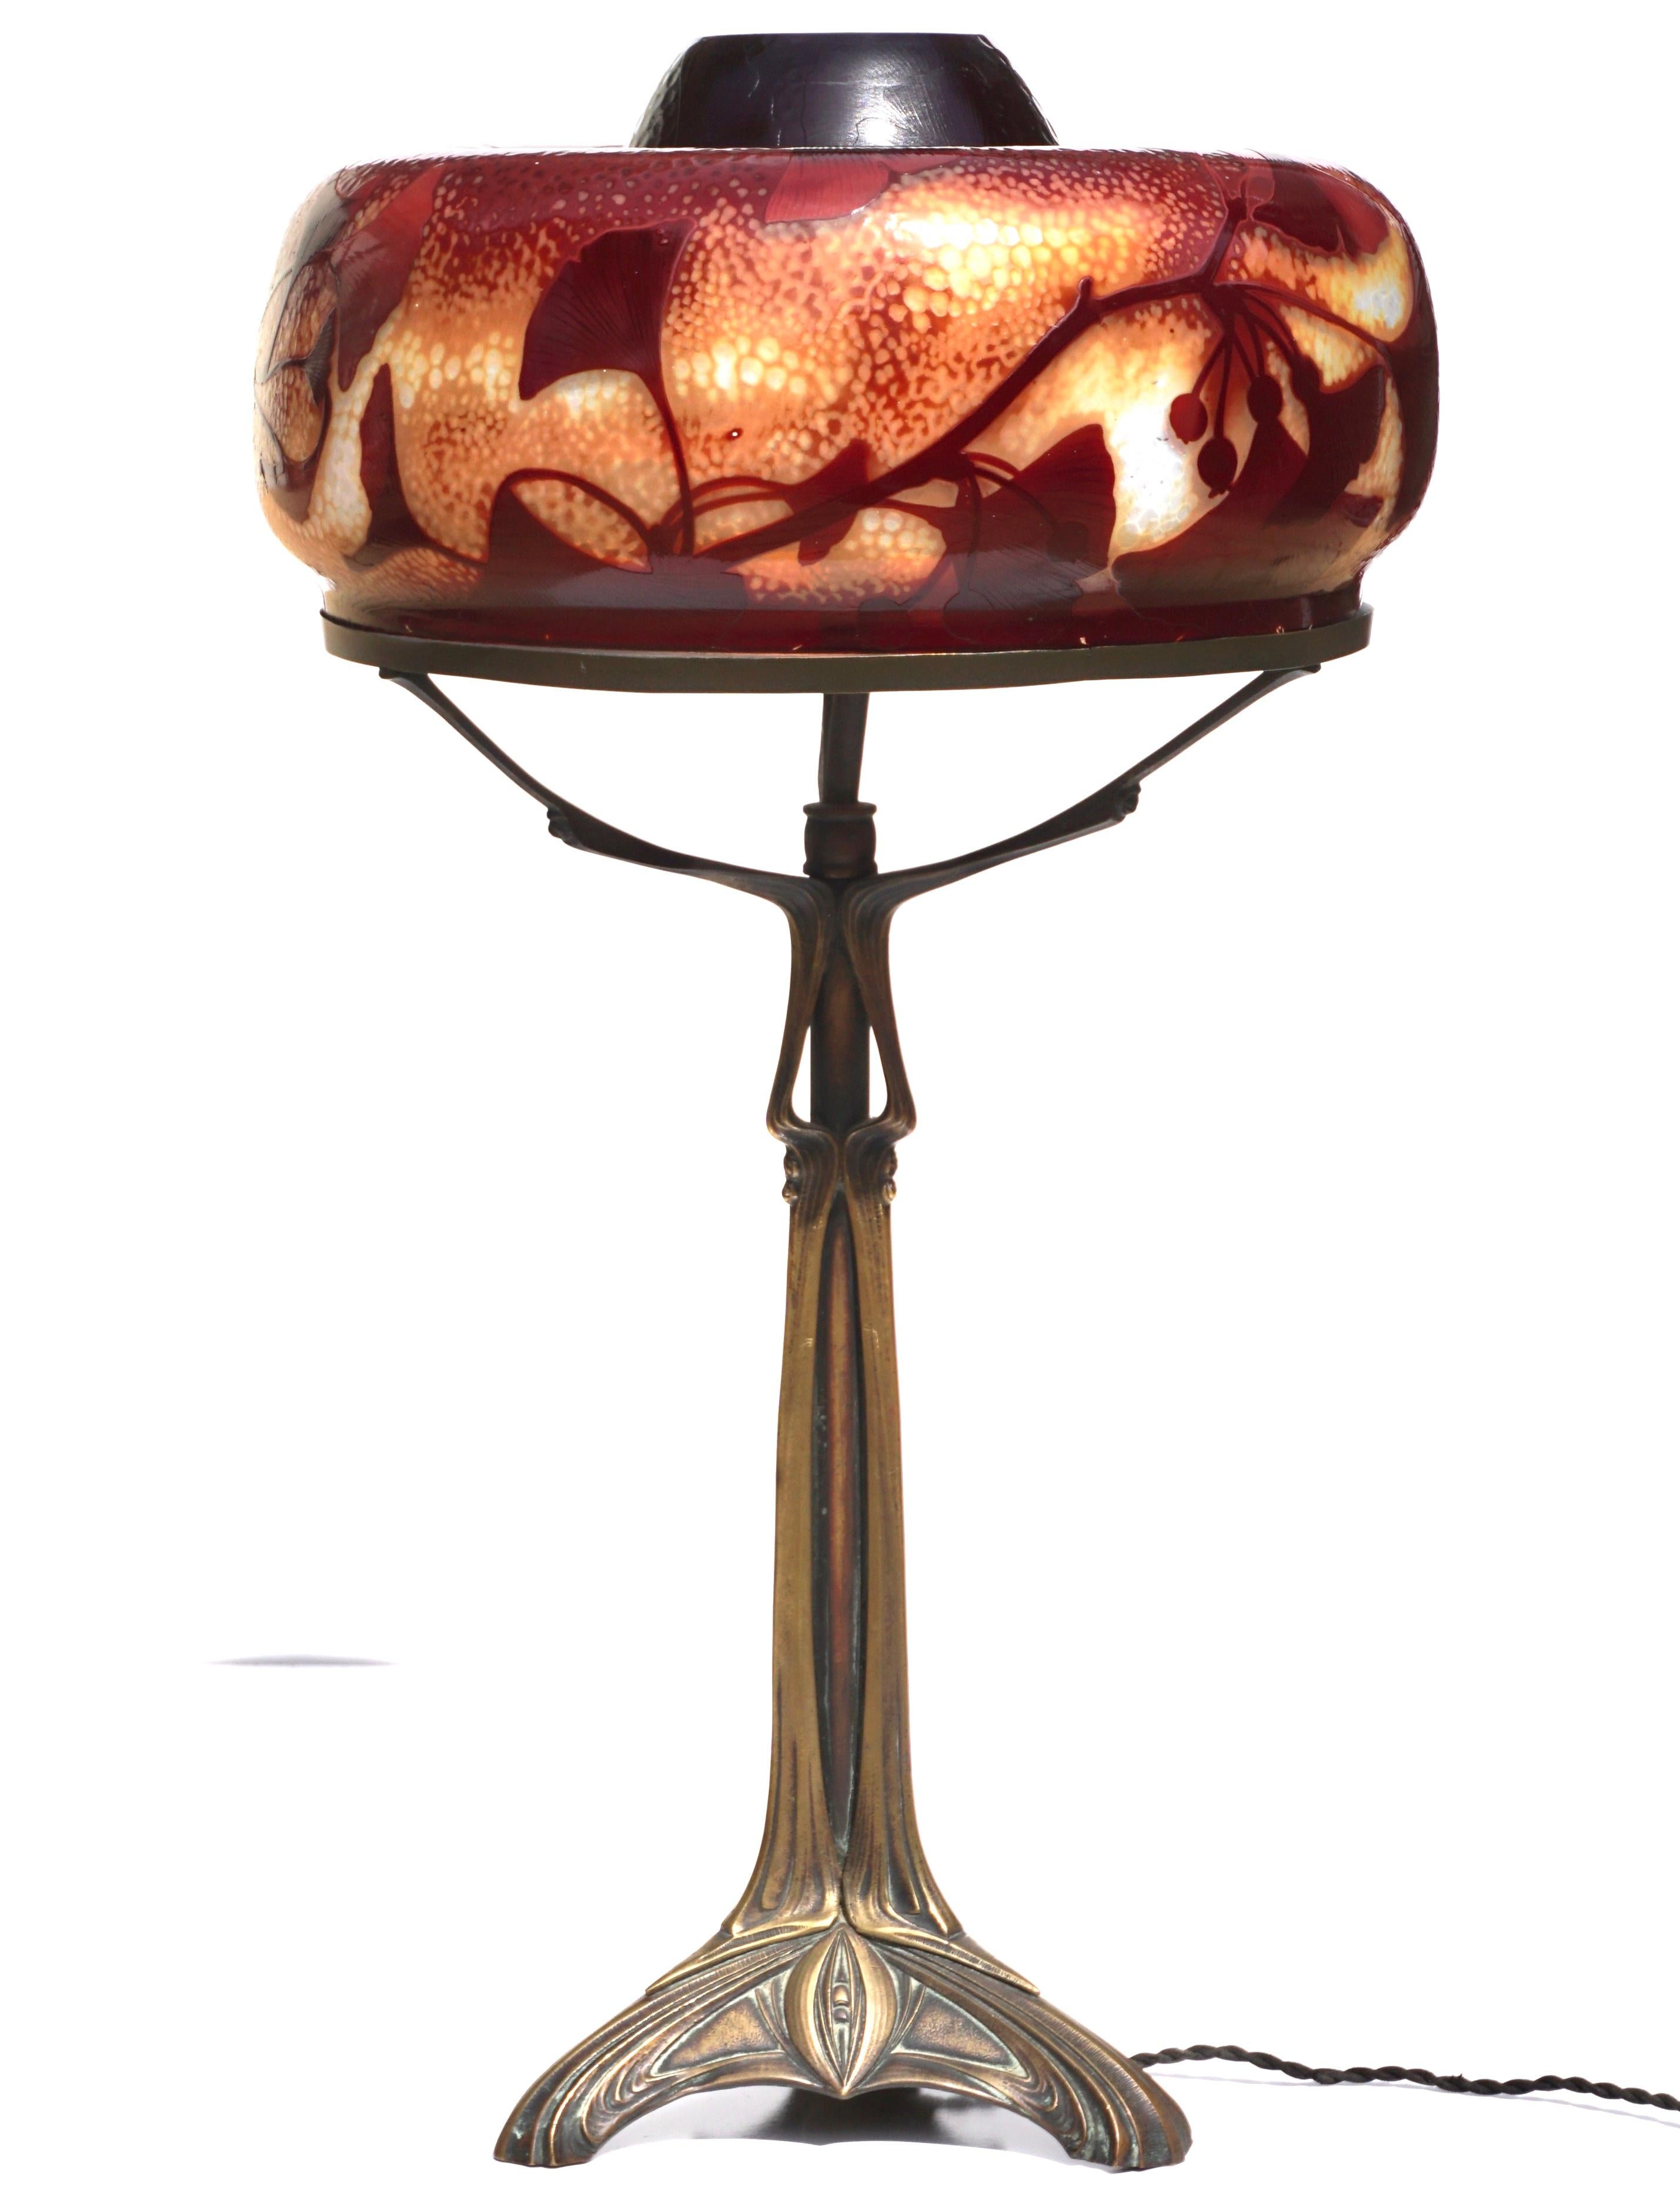 Hand-Crafted Daum Nancy Gingko Martele Art Nouveau Lamp